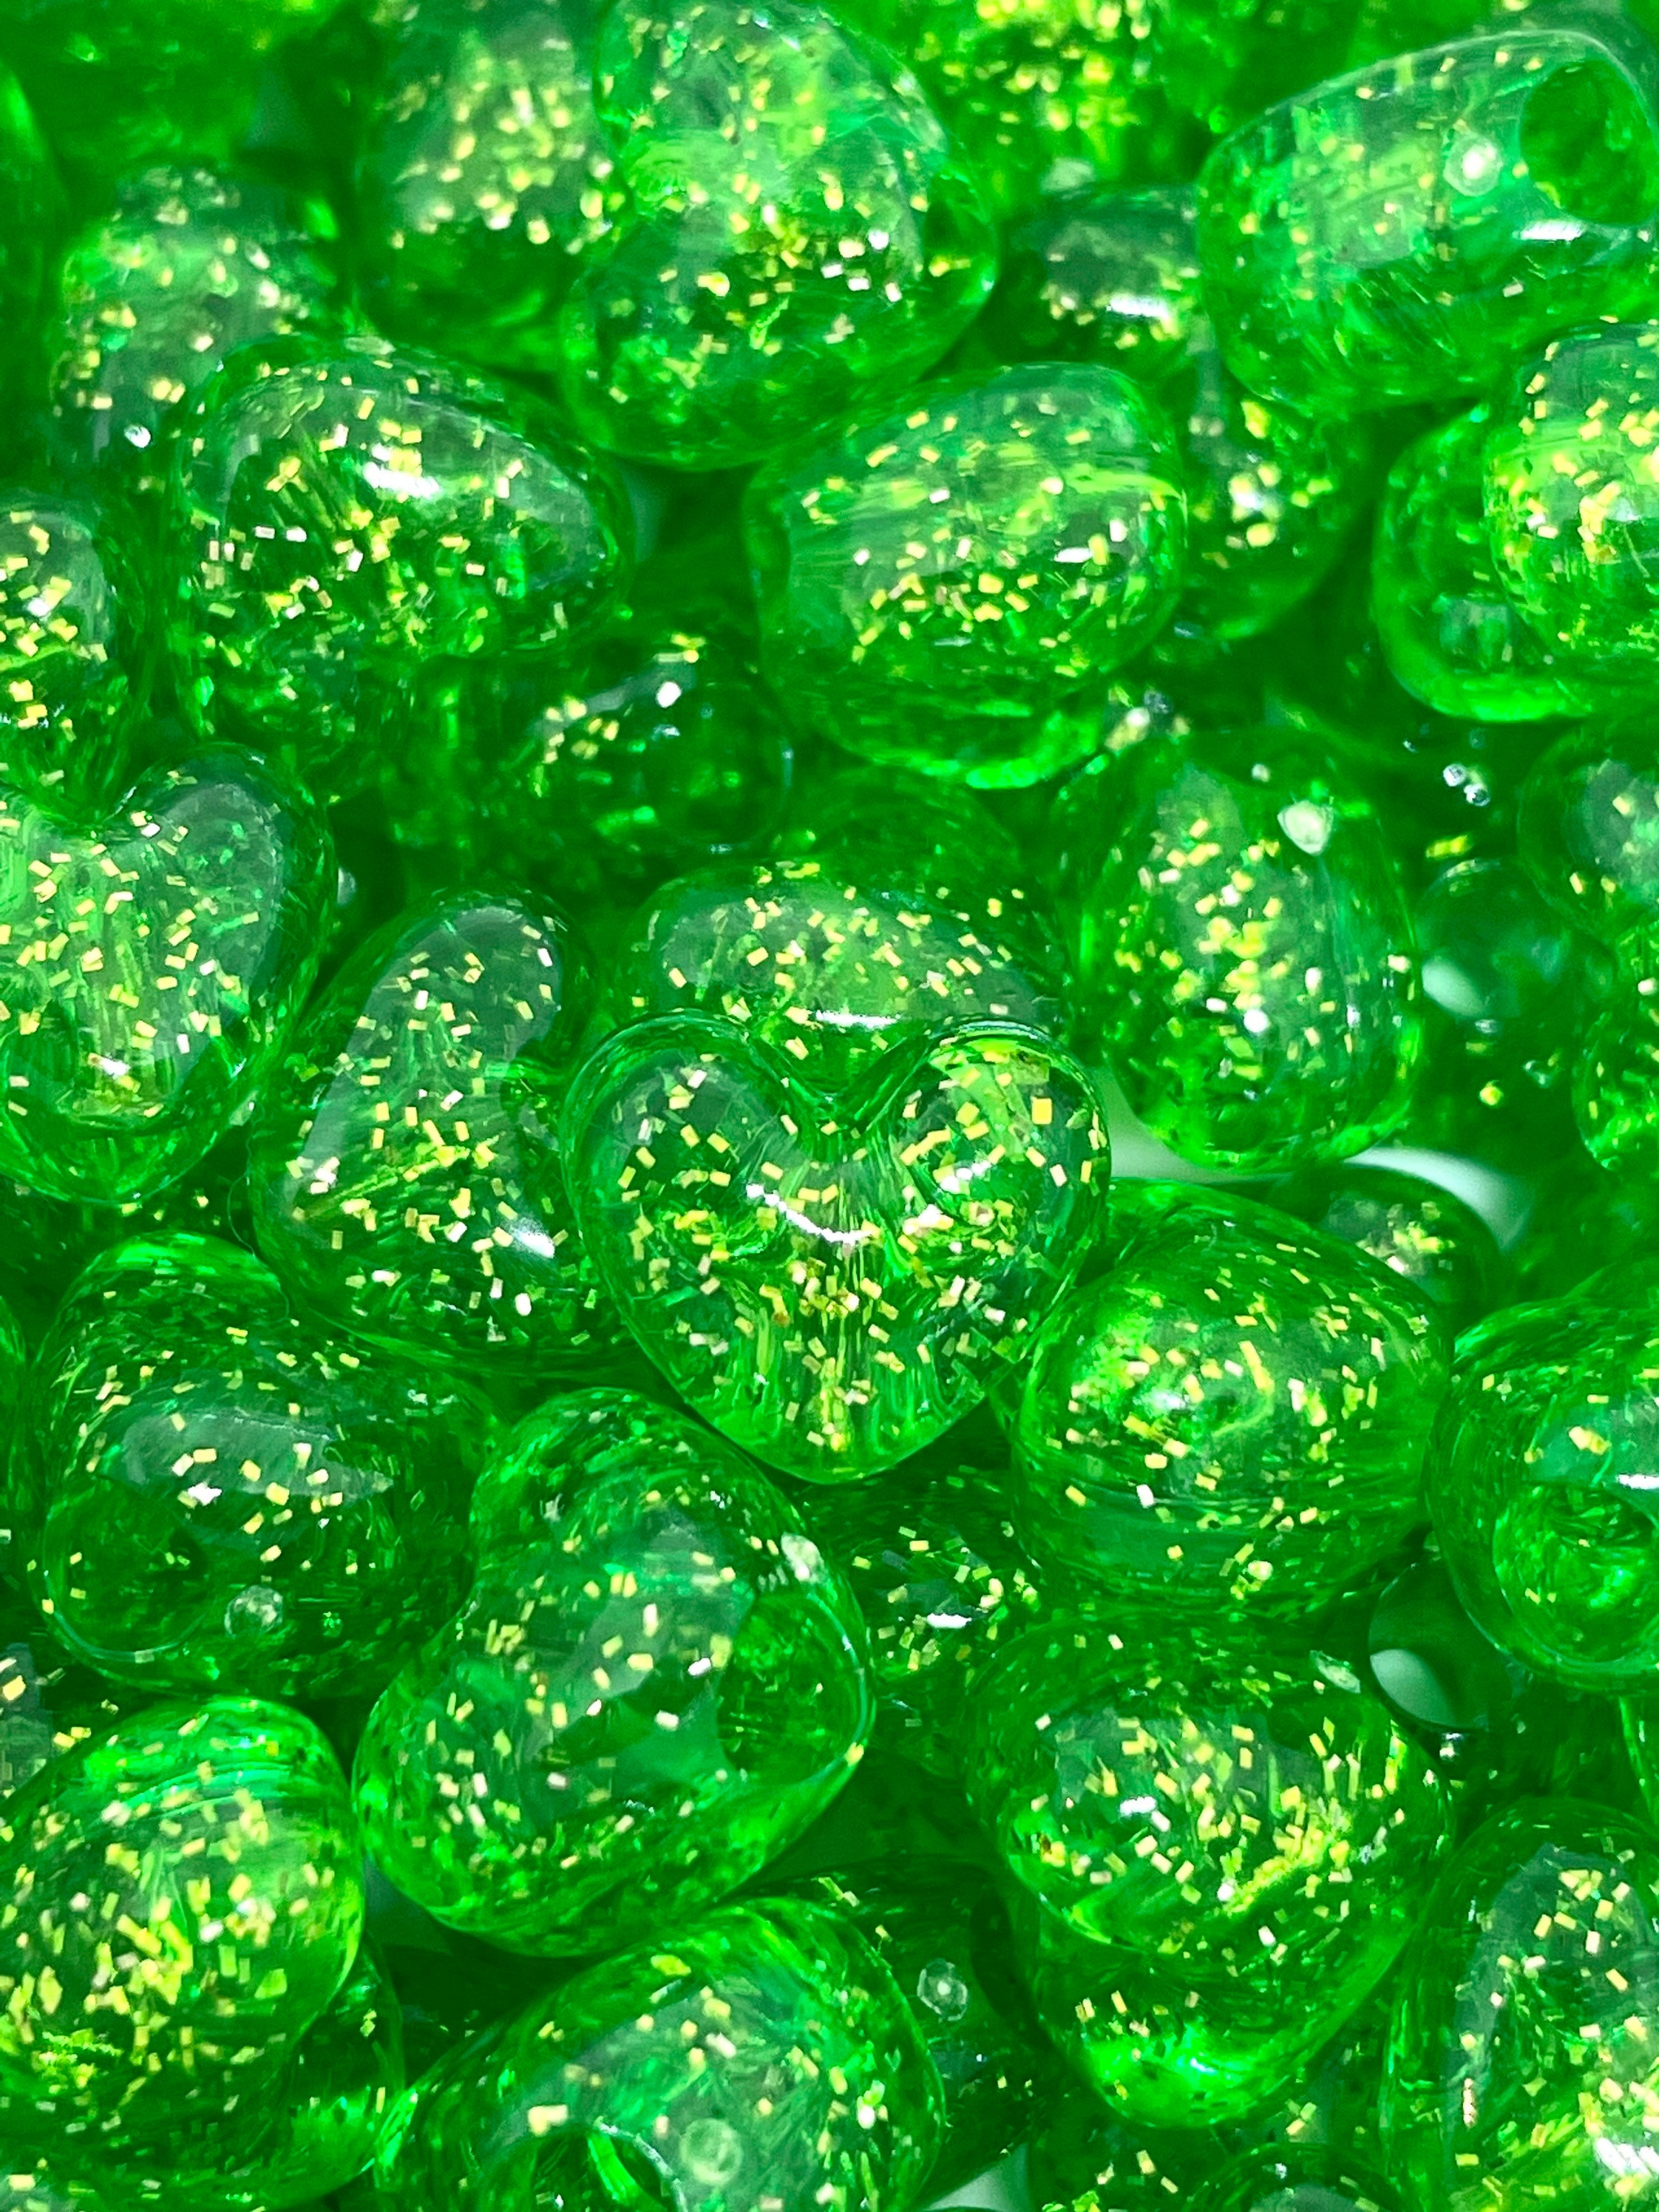 Pastel Fake Candy Quins, Fake Sprinkles for Slime, Round Sprinkles for